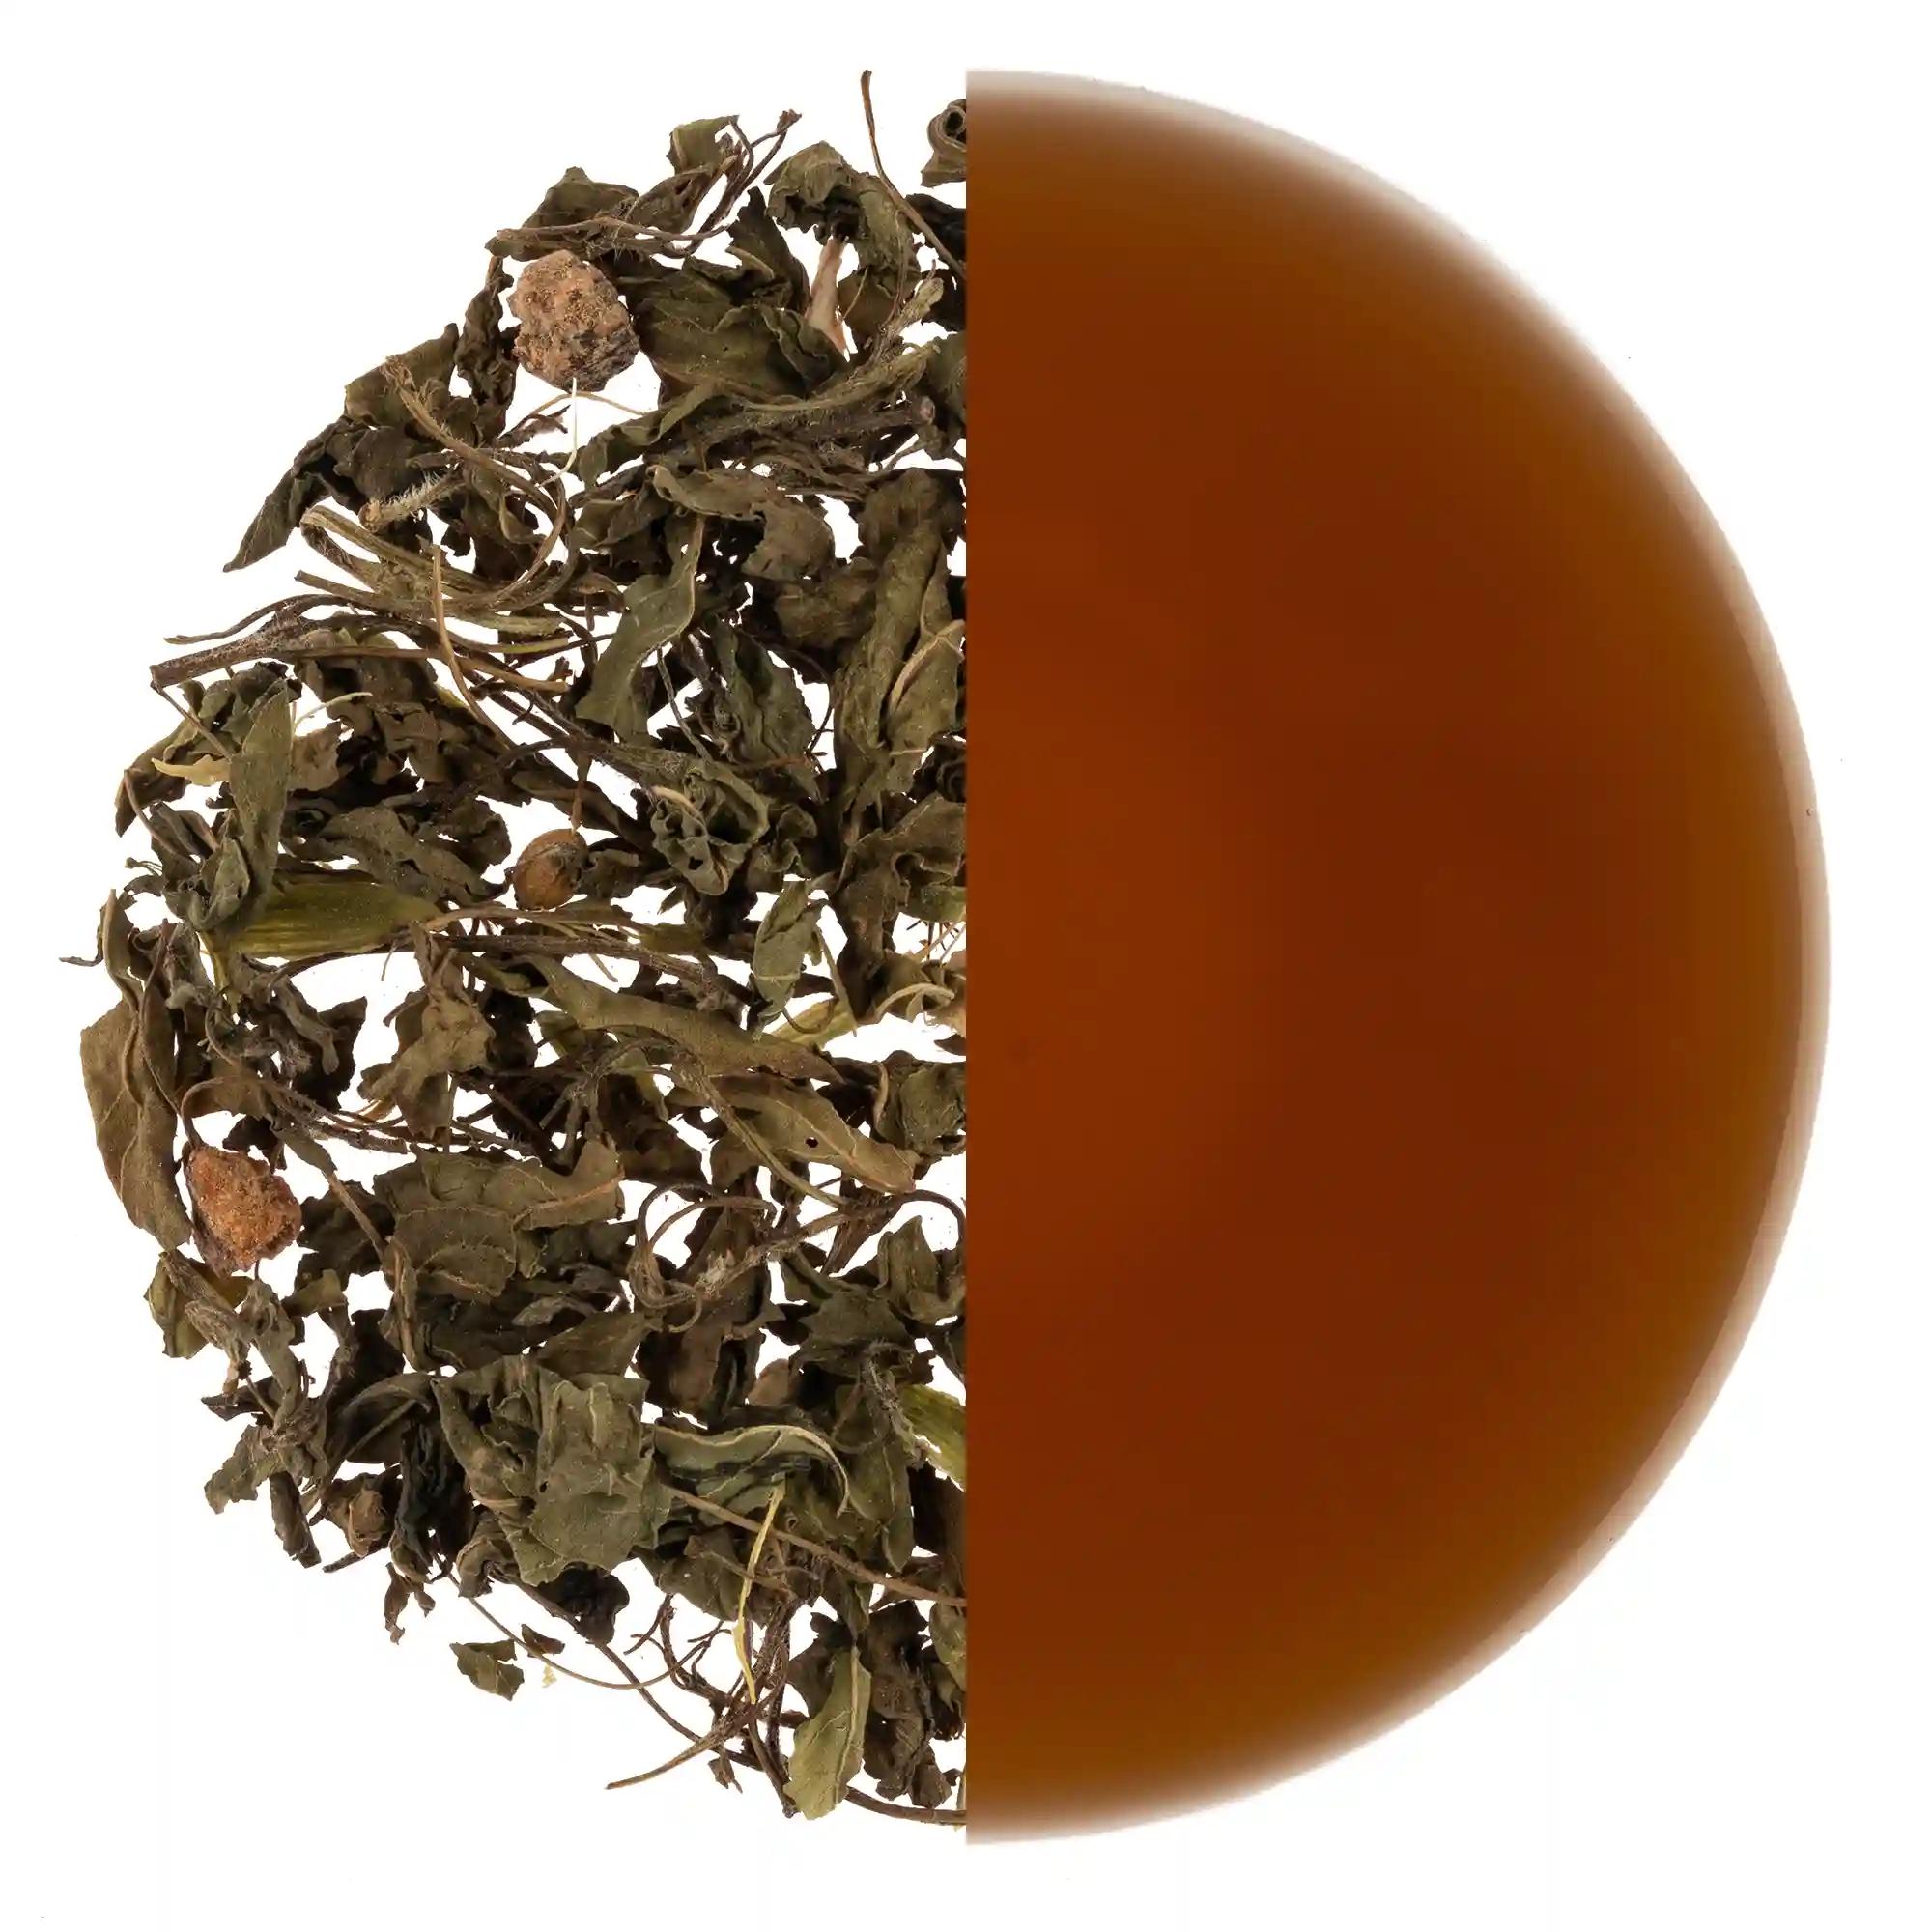 Tulsi Cardamom Herbal Tea - 100 Gm Pouch